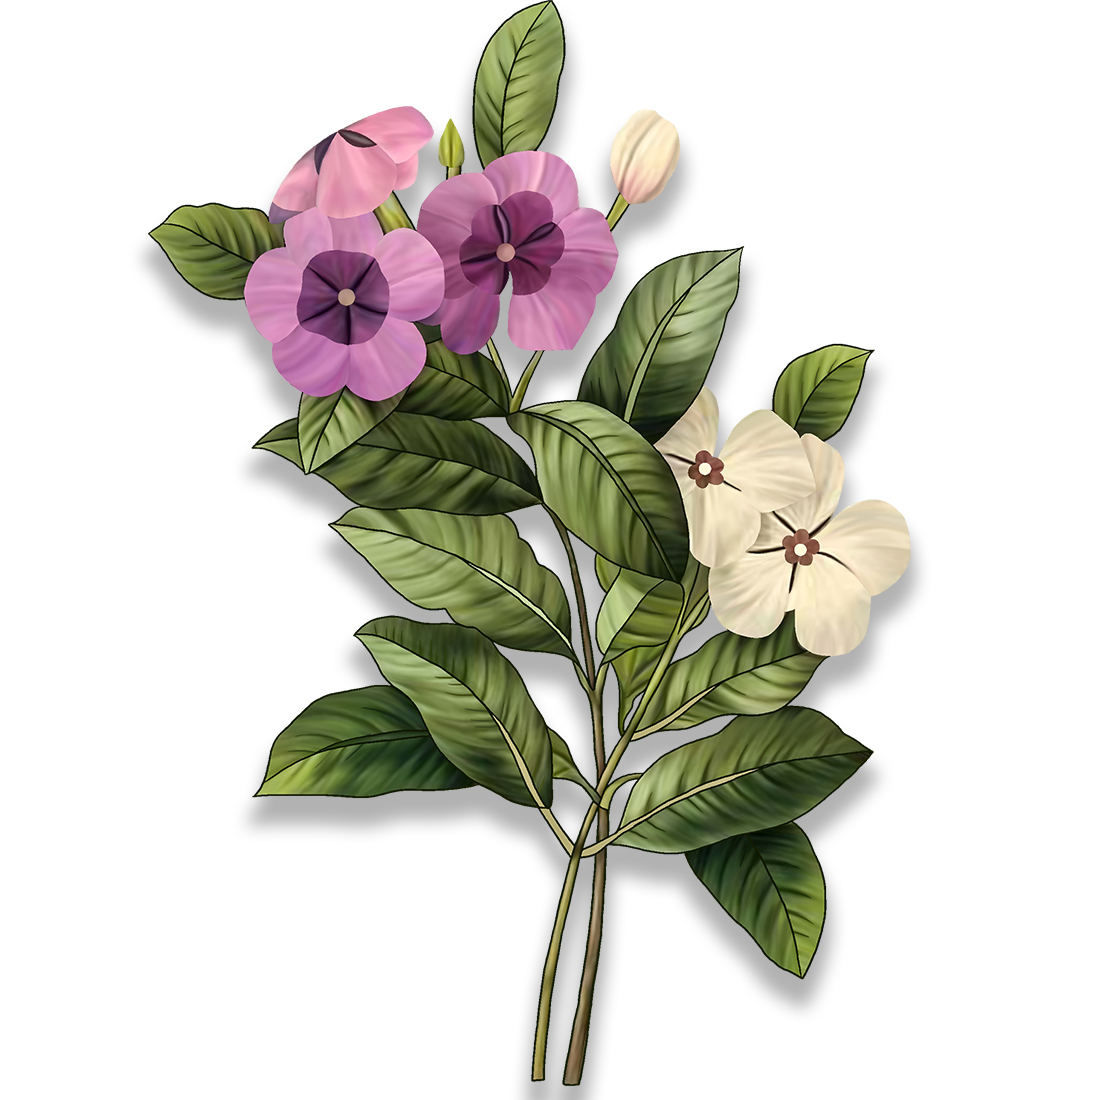 The high-quality digital floral design, Flowers transparent background high-resolution 300 DPI preview image.